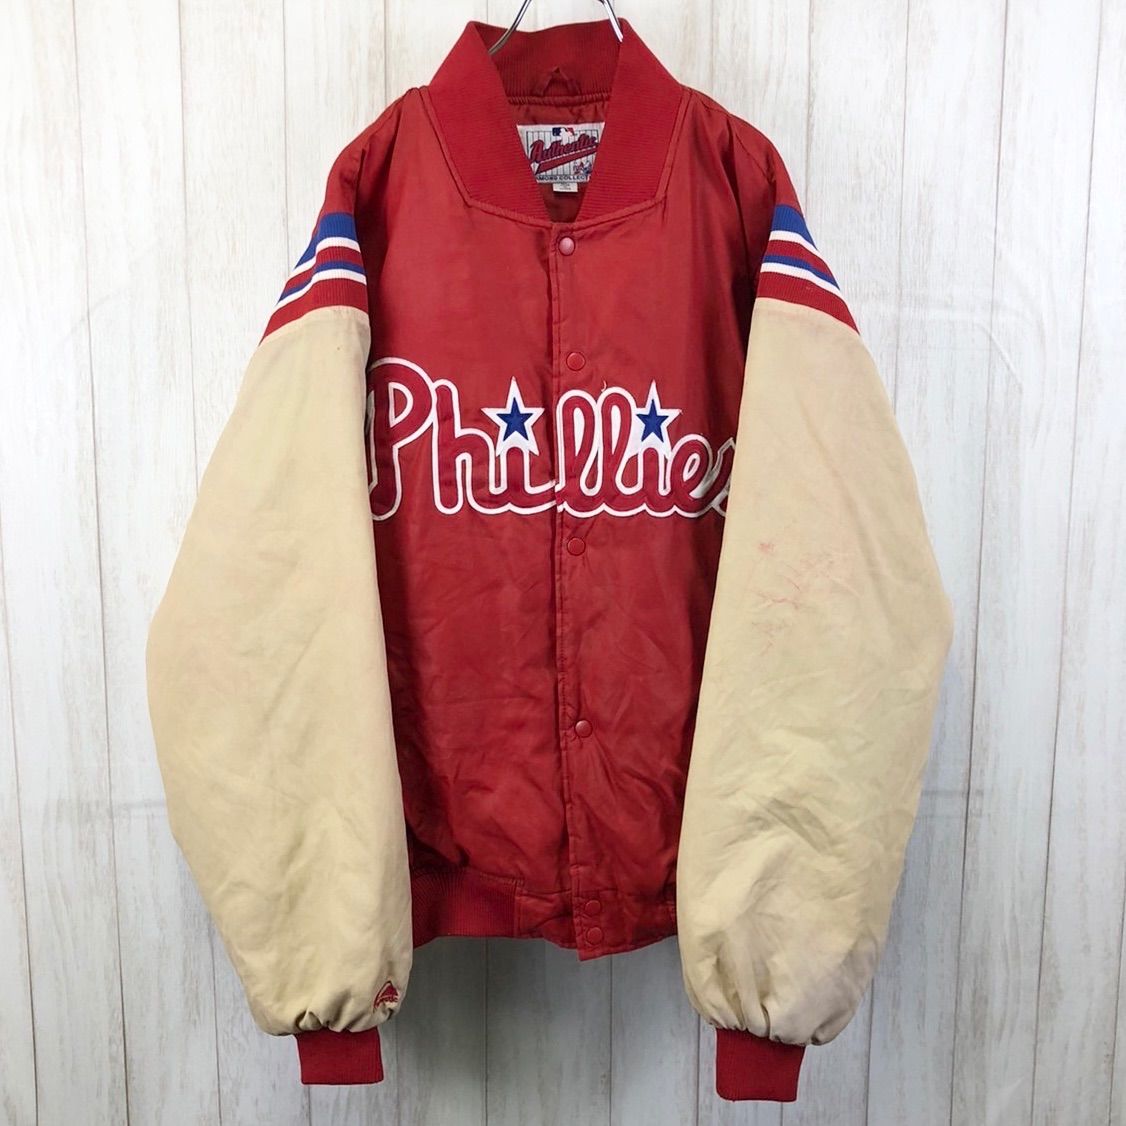 Begin掲載 美品 Majestic MLB フィラデルフィア Phillies Jacket